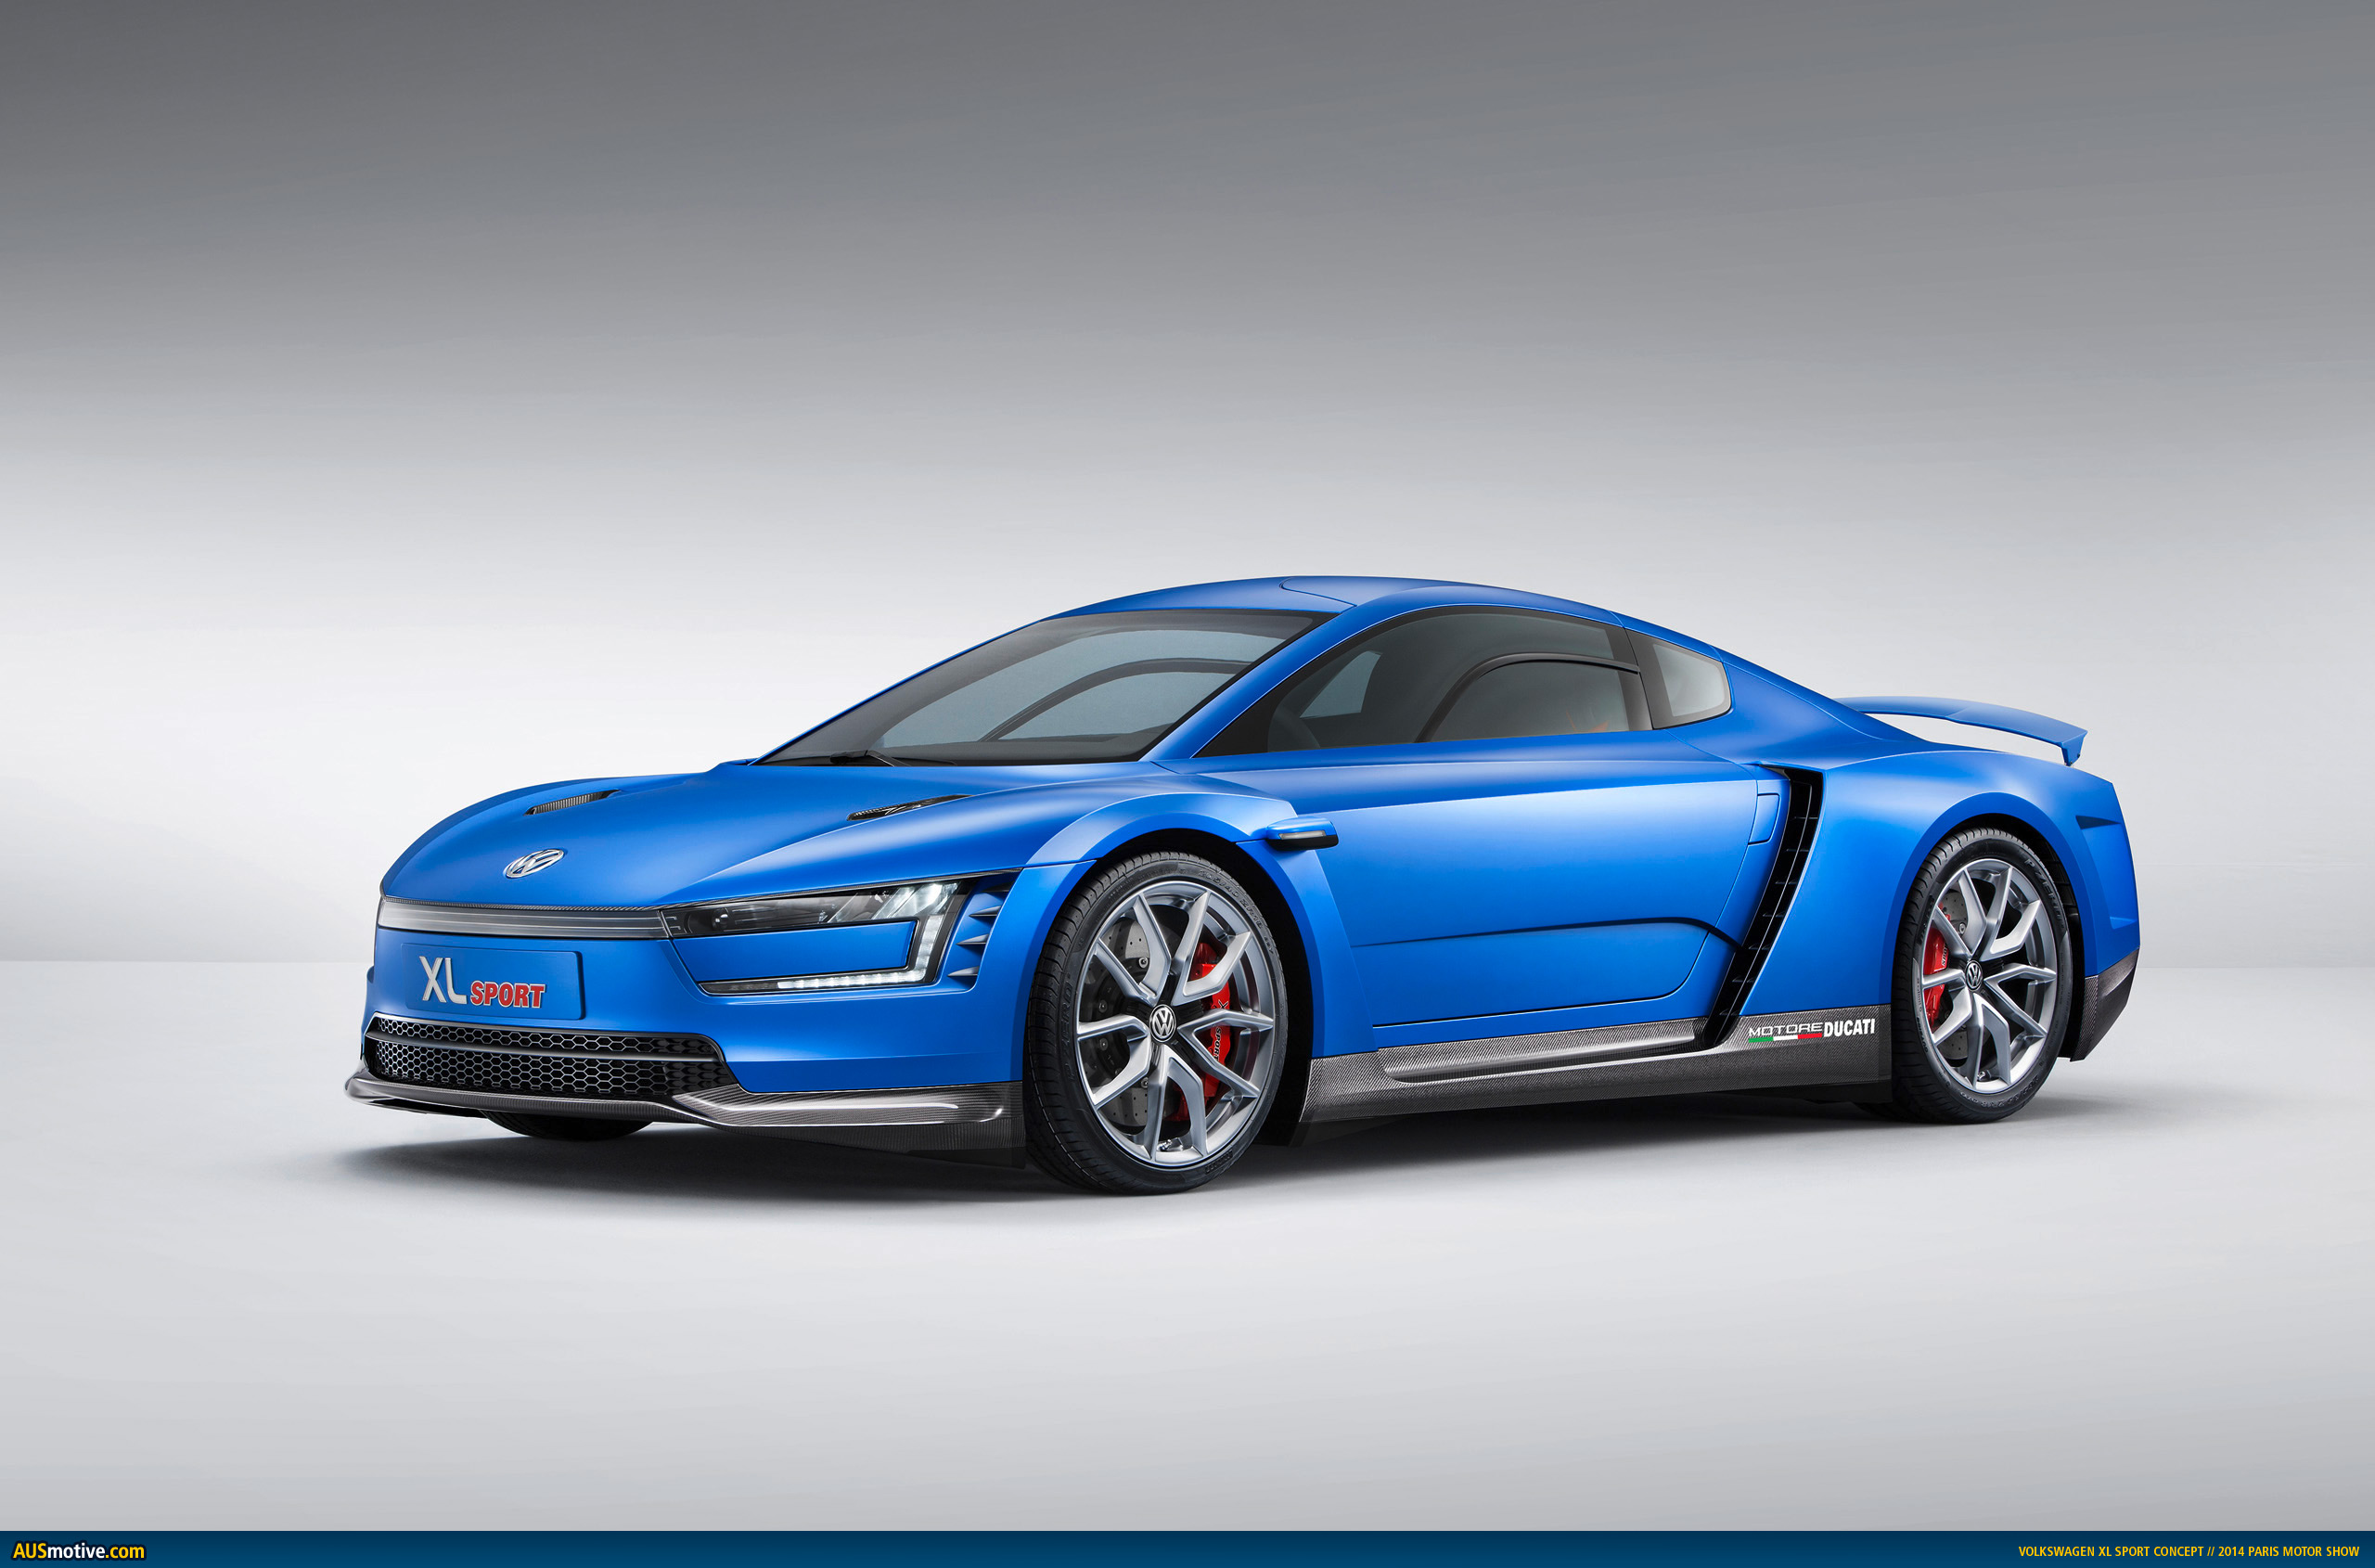 AUSmotive.com » Paris 2014: Volkswagen XL Sport
